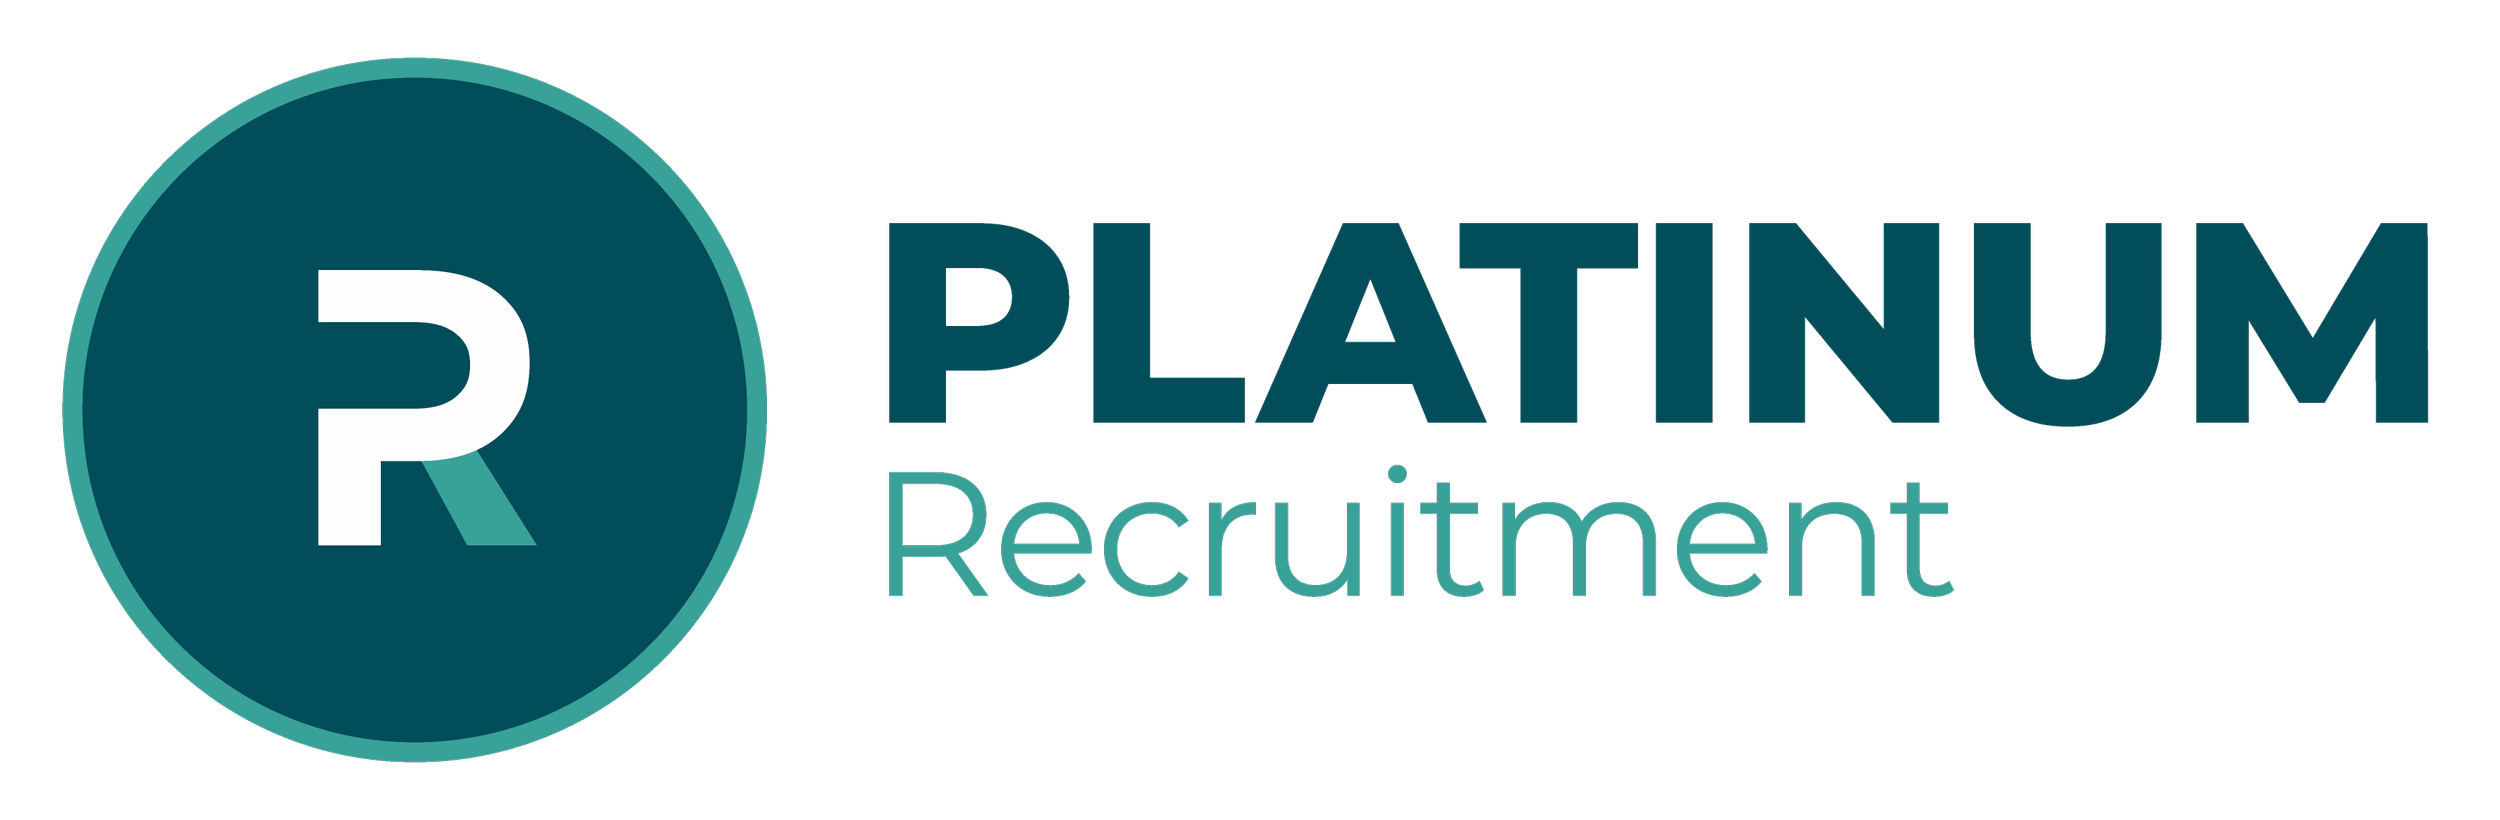 Platinum_Recruitment_Logo_Dark_RGB_LARGE.png